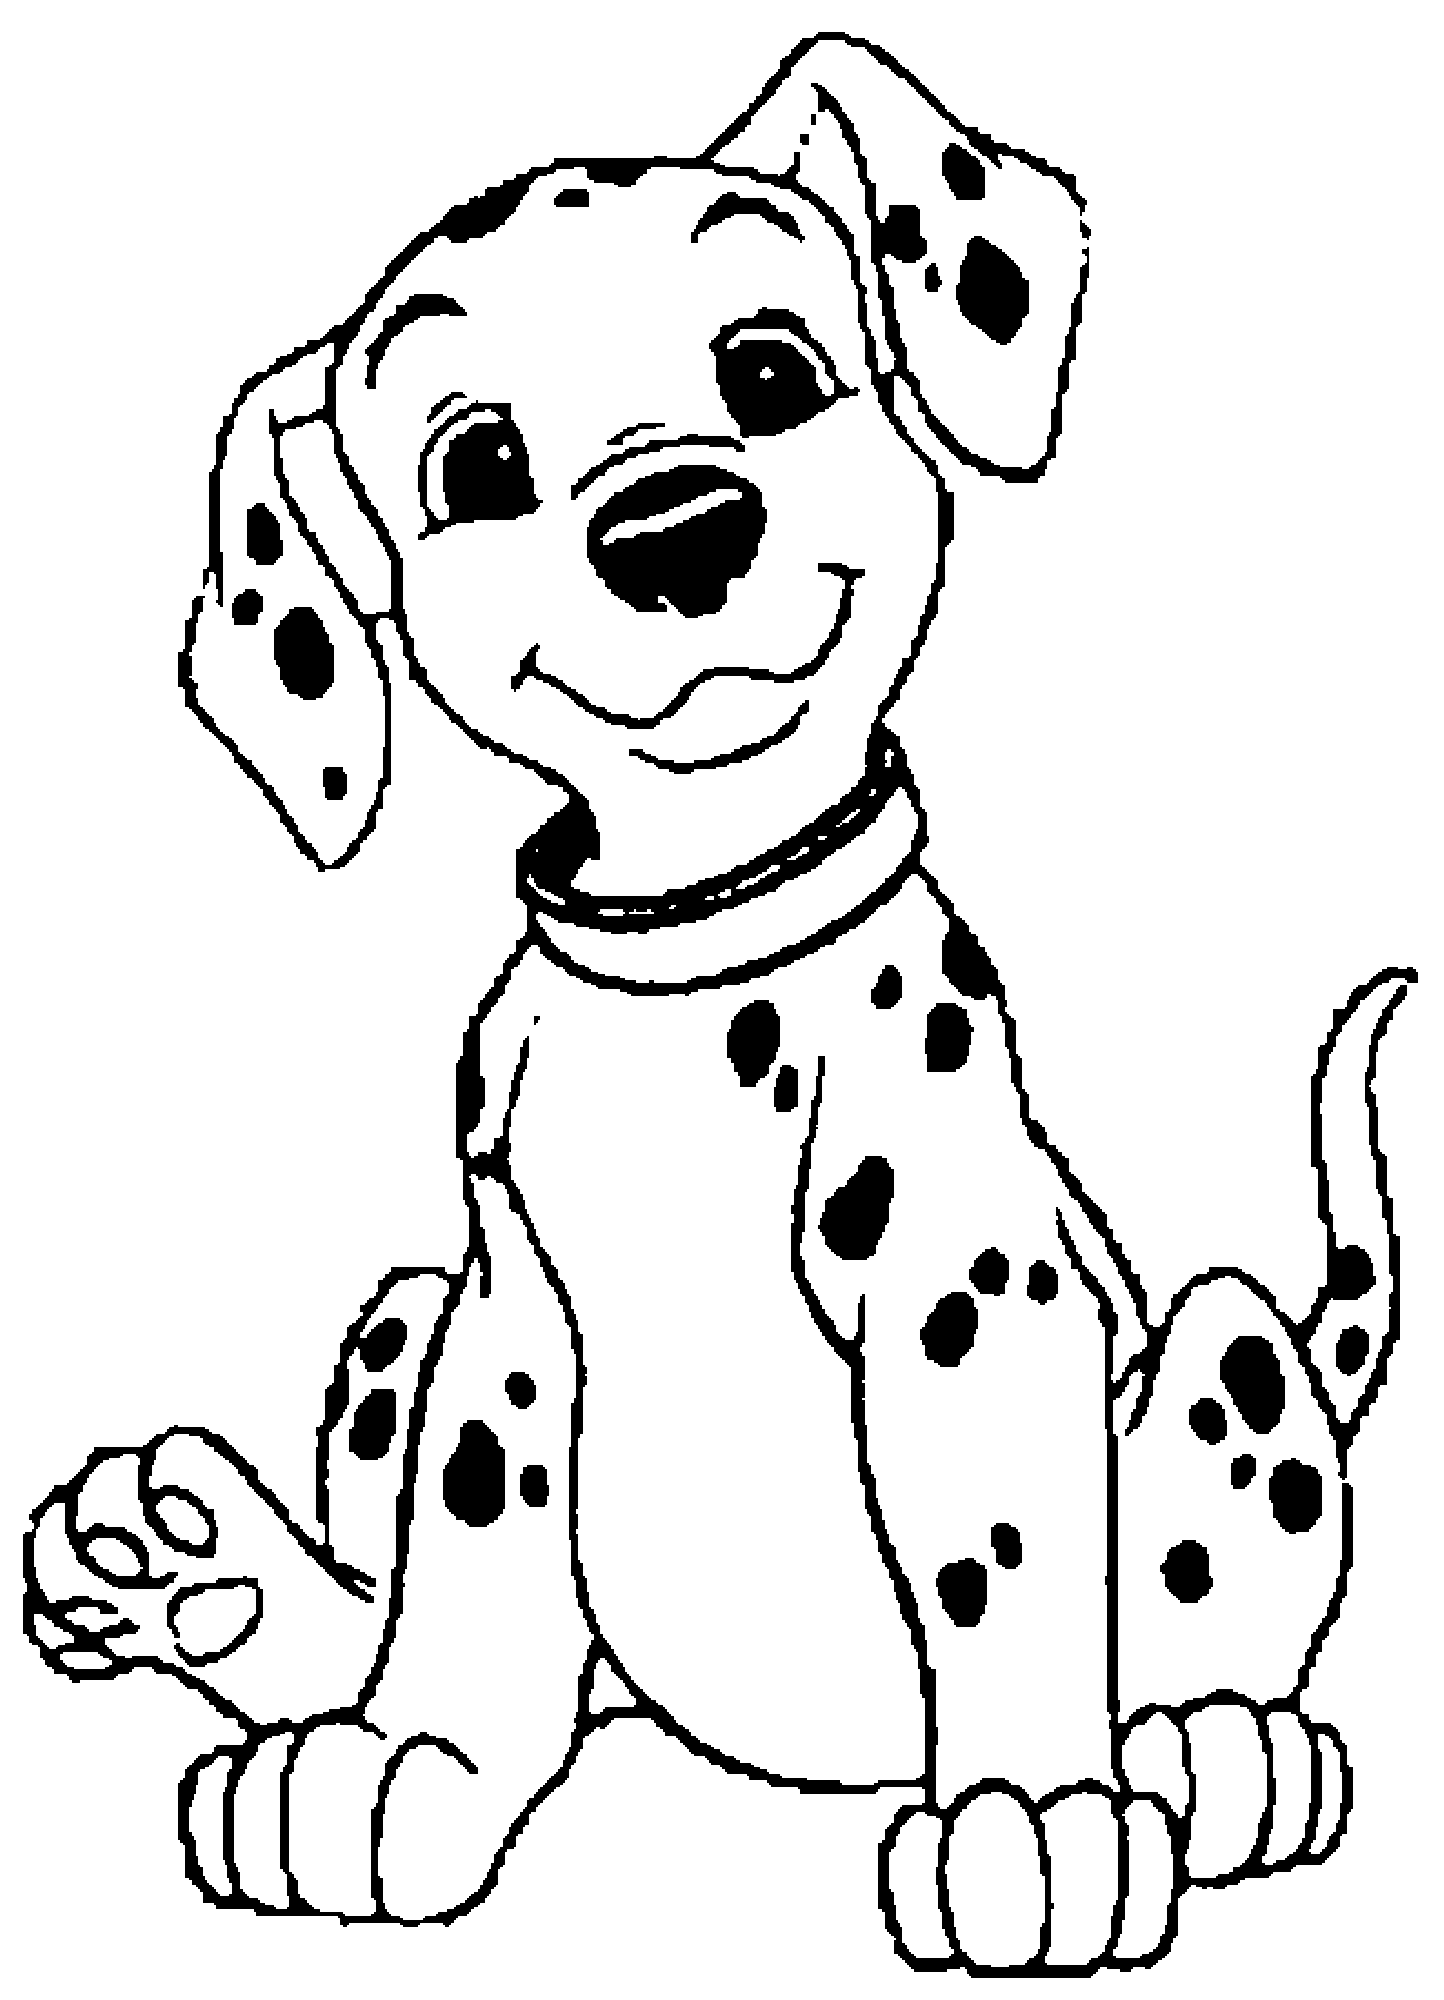 101 Dalmatians coloring pages to print for kids - 101 Dalmatians Kids